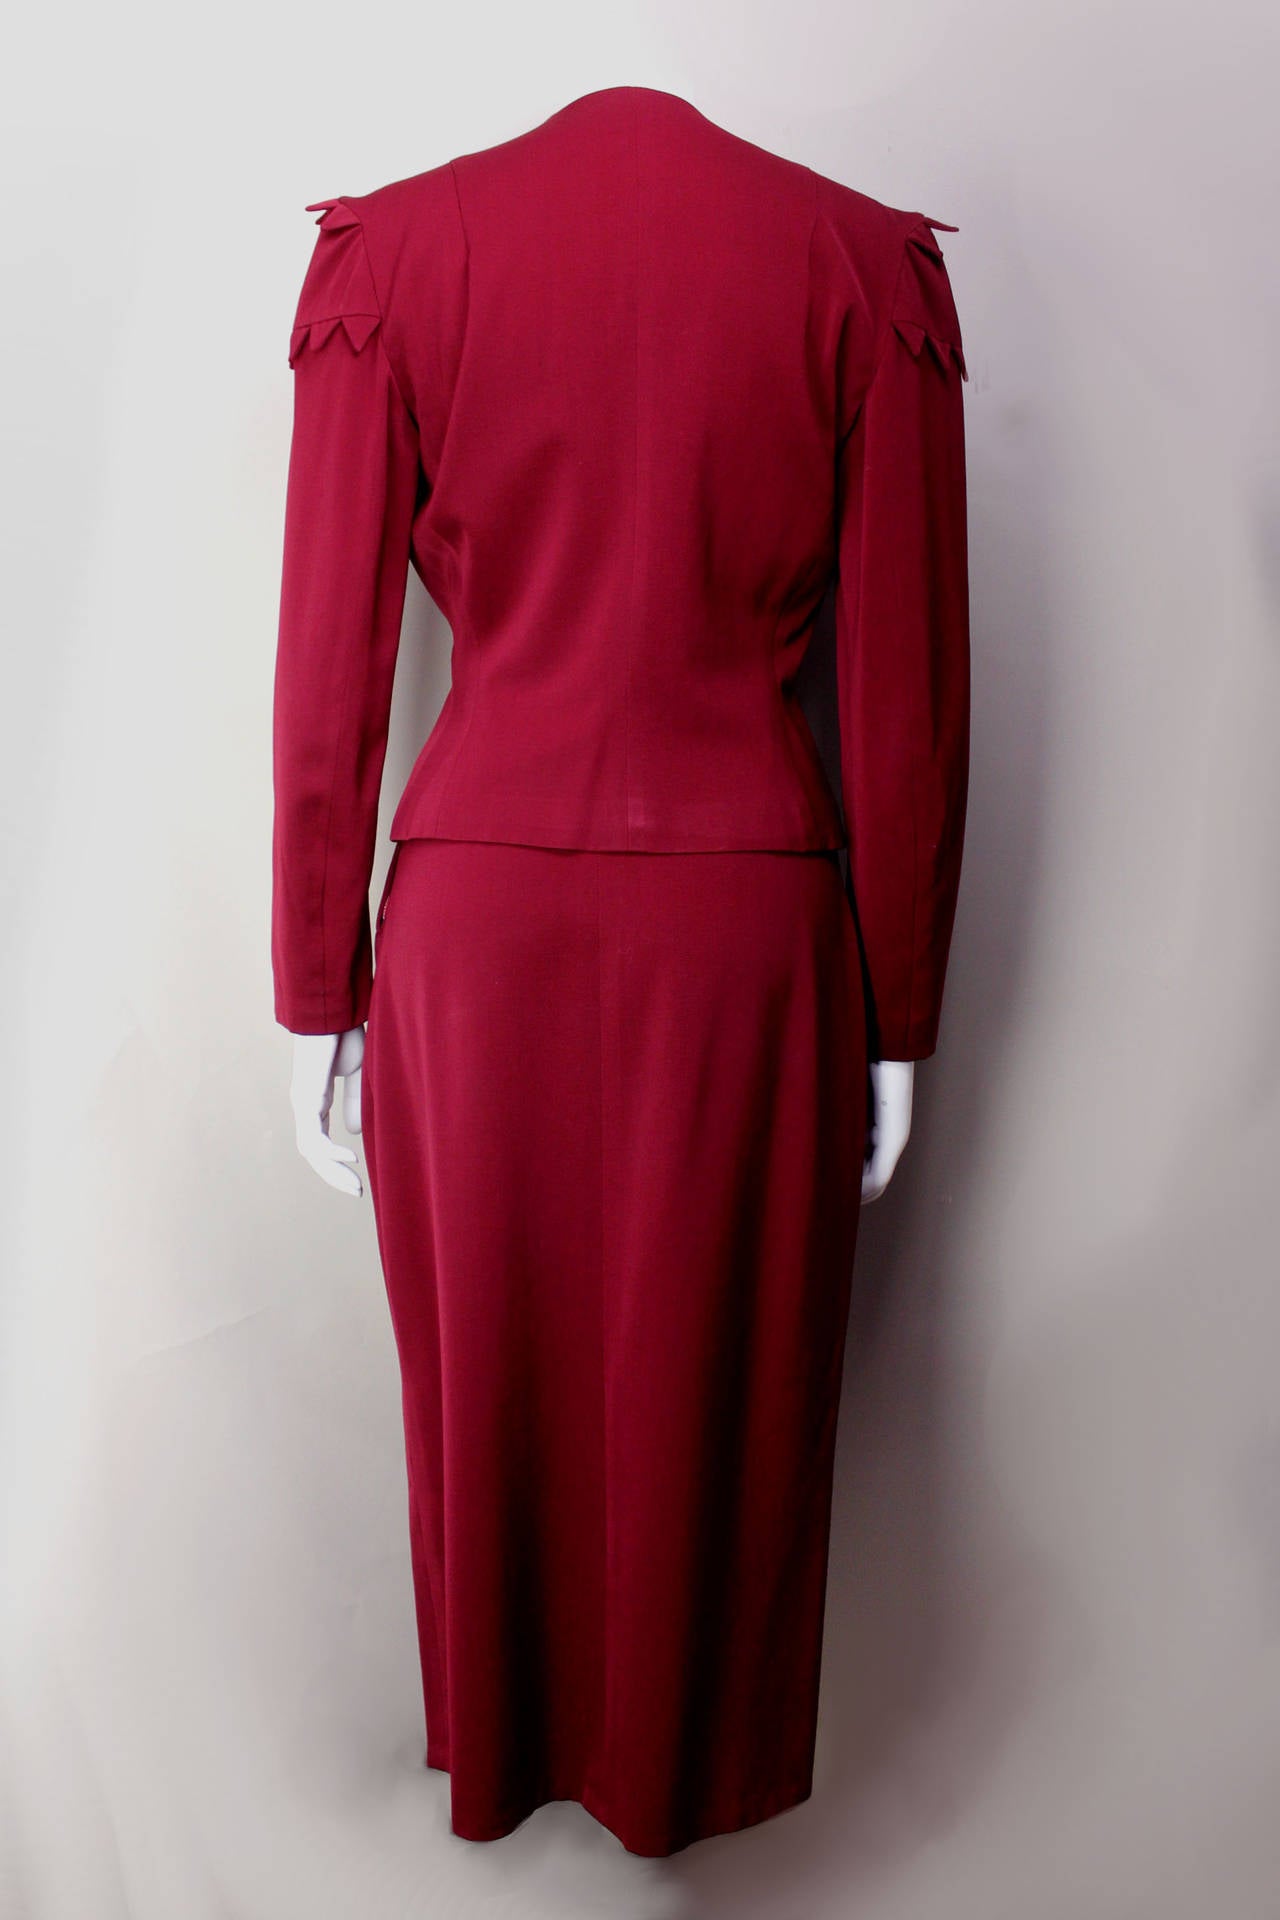 Red 1940s Womens Suit with Unique Chevron-Shaped Details